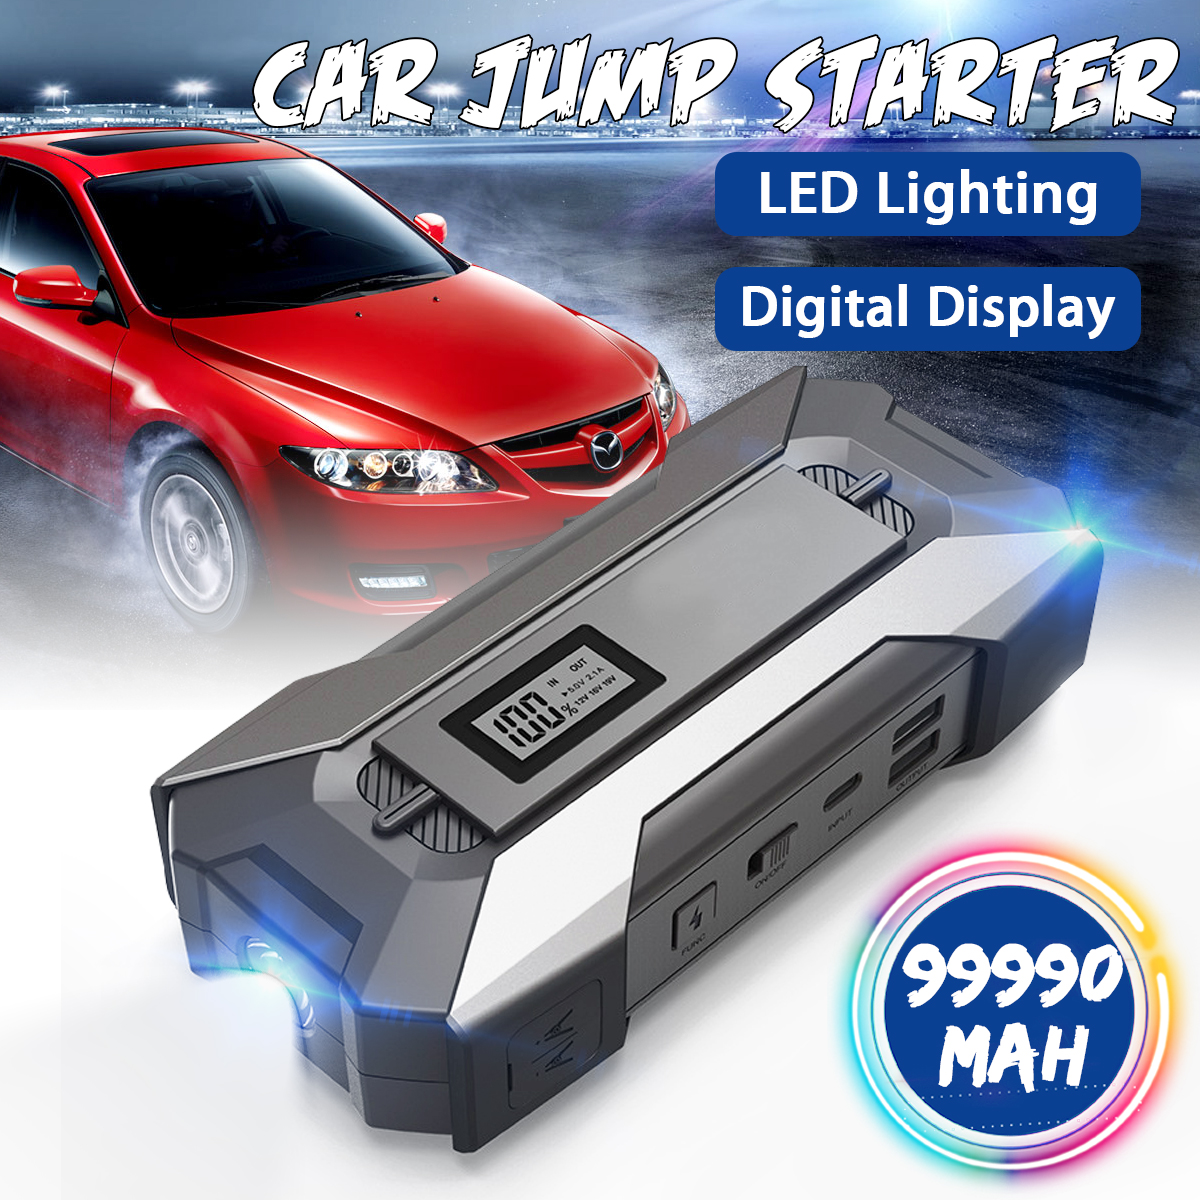 A11-Display-True-10000mah-Portable-Car-Jump-Starter-Emergency-Power-Bank-Emergency-Charger-Battery-1640834-2